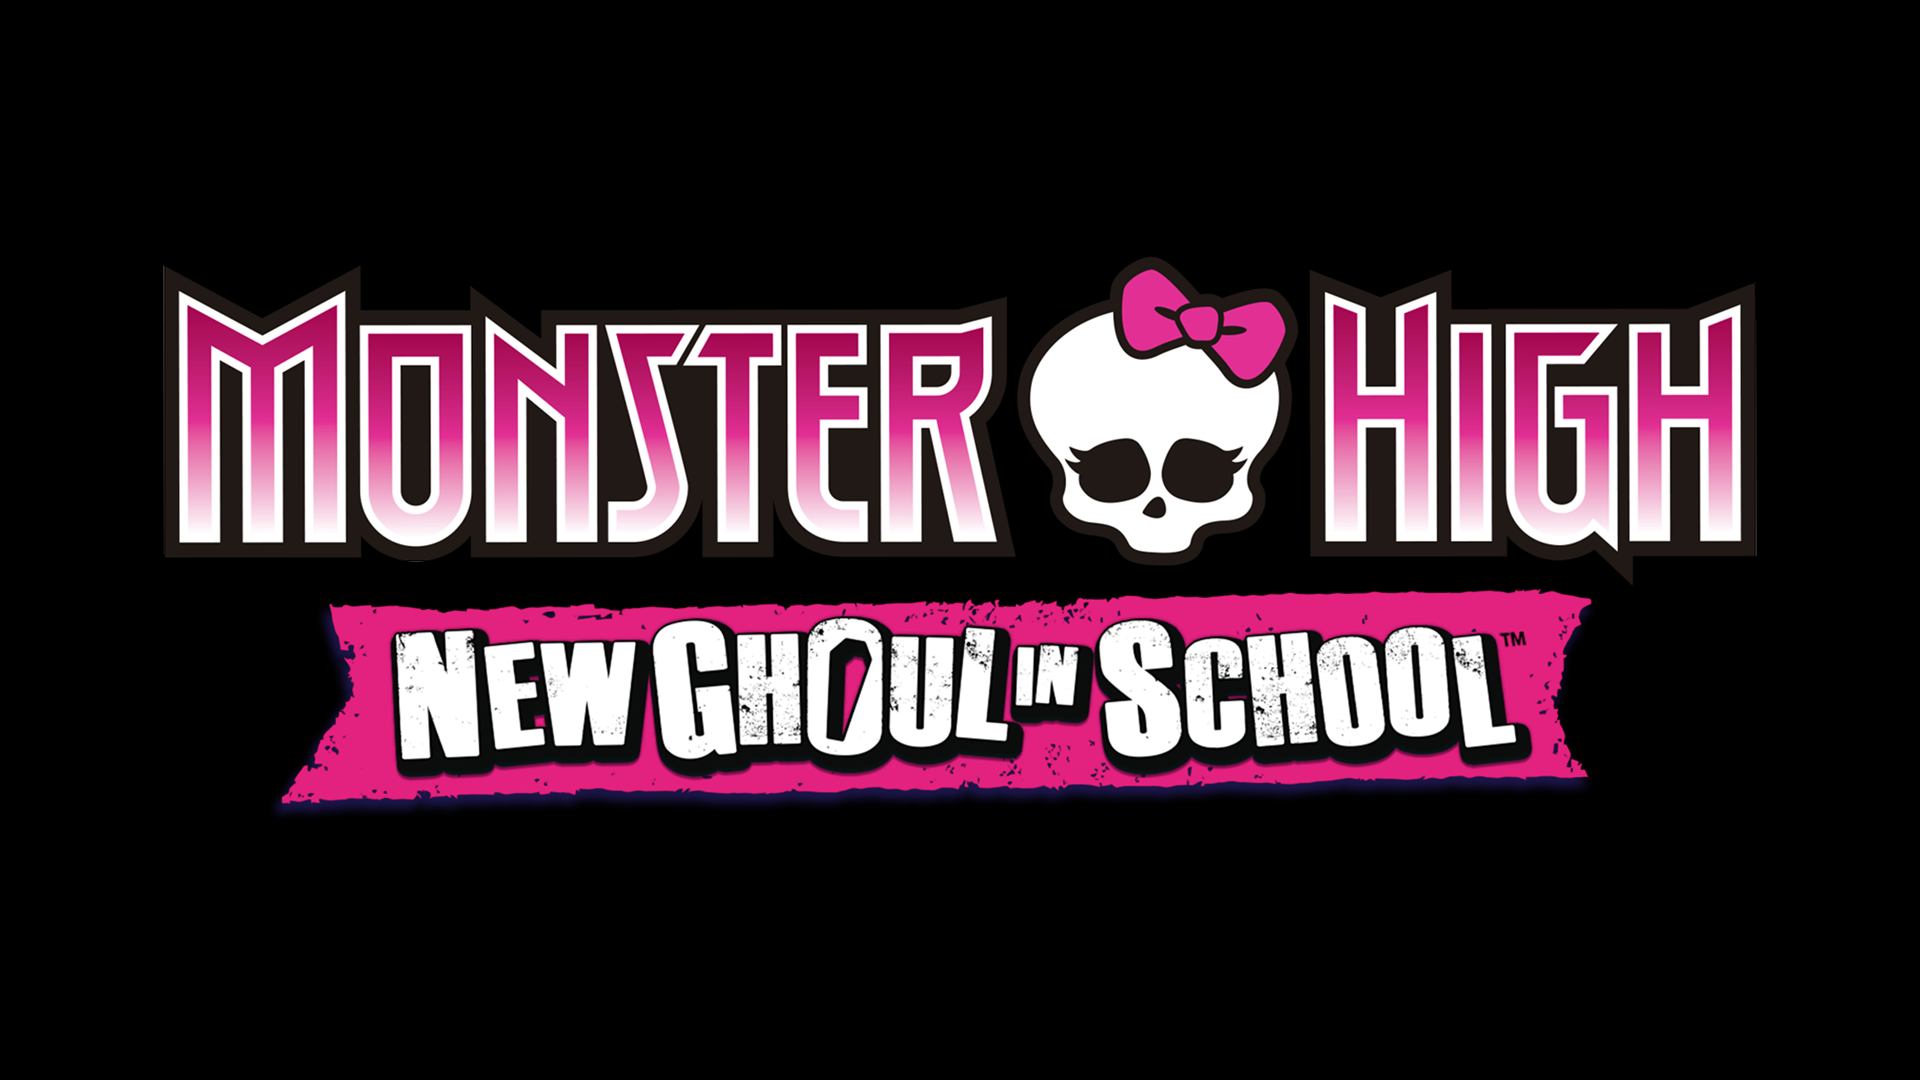 New ghoul school. Монстер Хай New Ghoul in School. Обои Монстер Хай на рабочий стол. New Monster High.